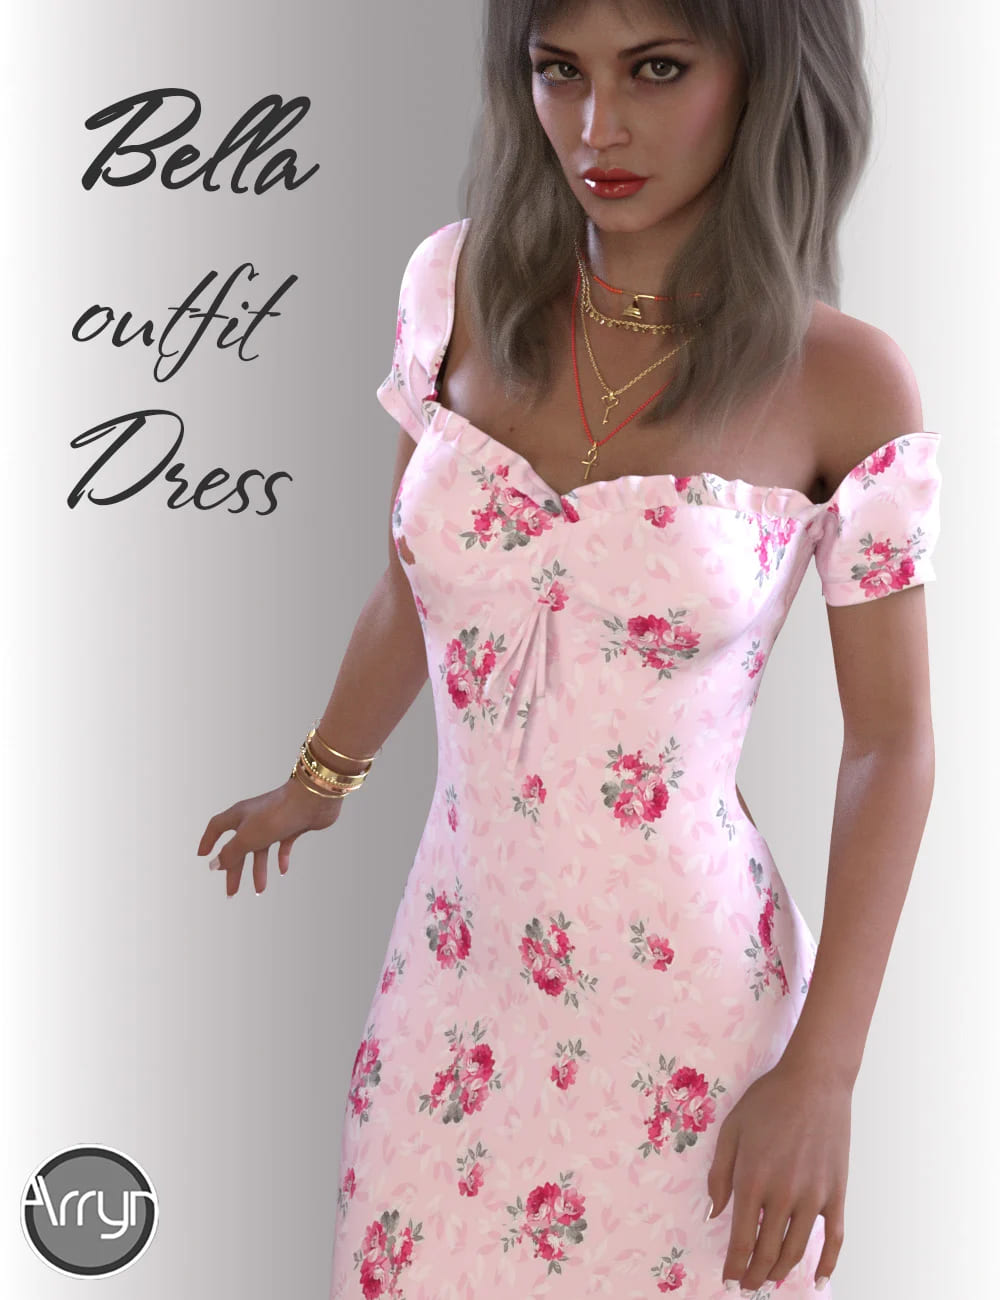 dForce Bella Dress Outfit for Genesis 8.1 Females_DAZ3D下载站